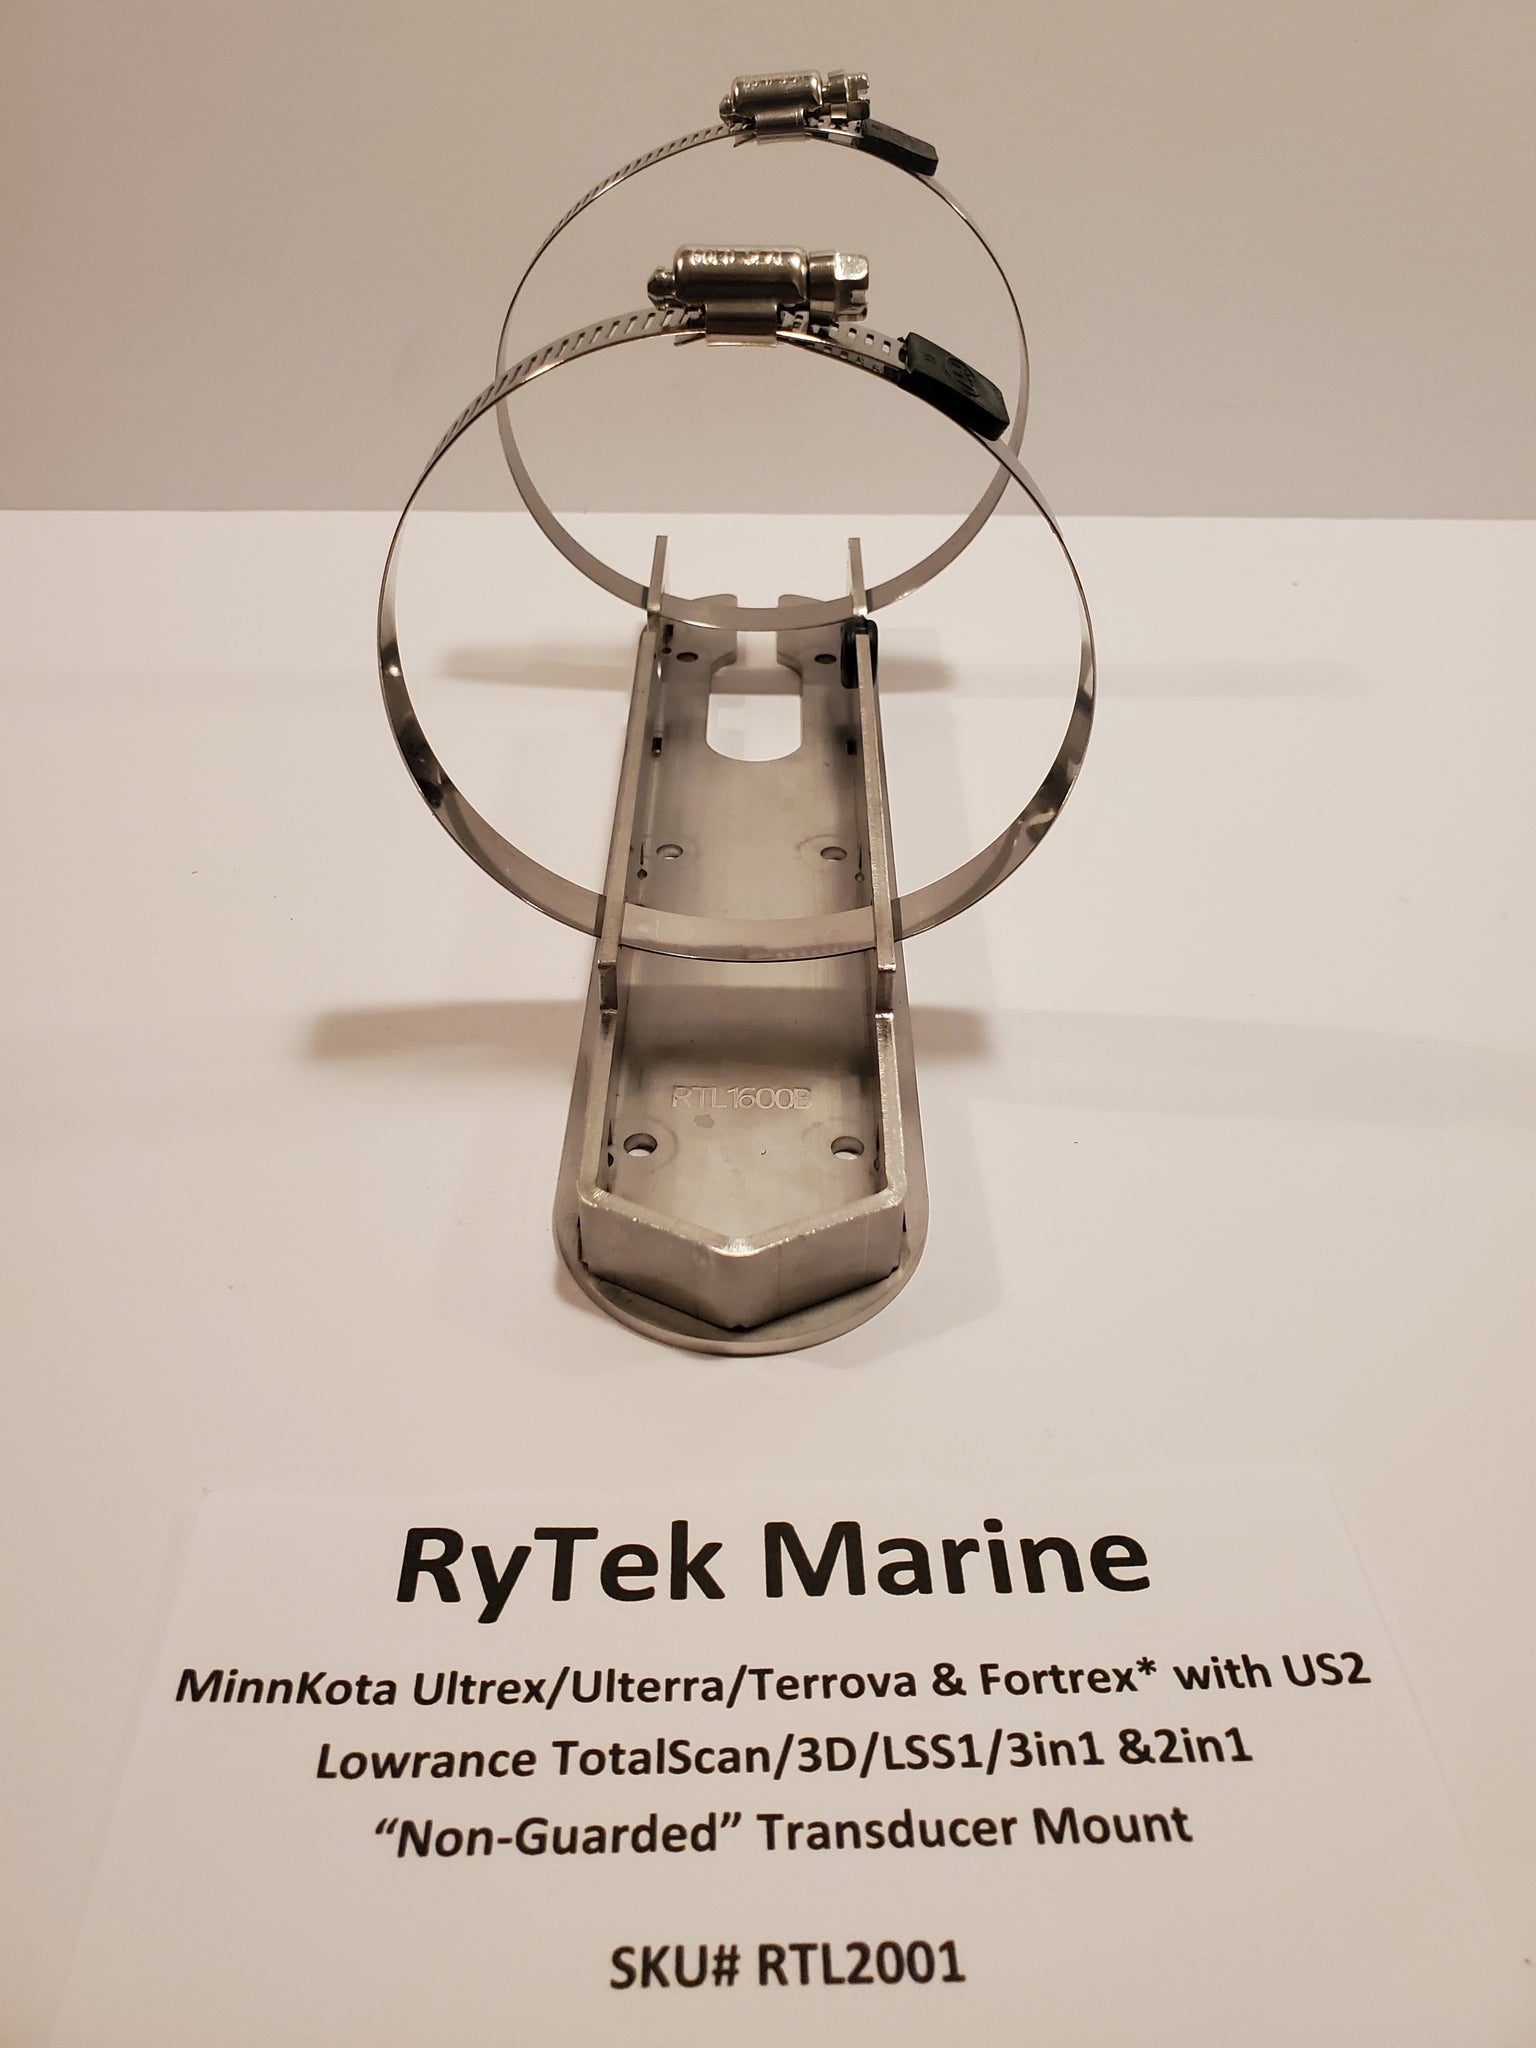 Southern California - Lowrance Triple Shot RyTek Marine Transducer Mount